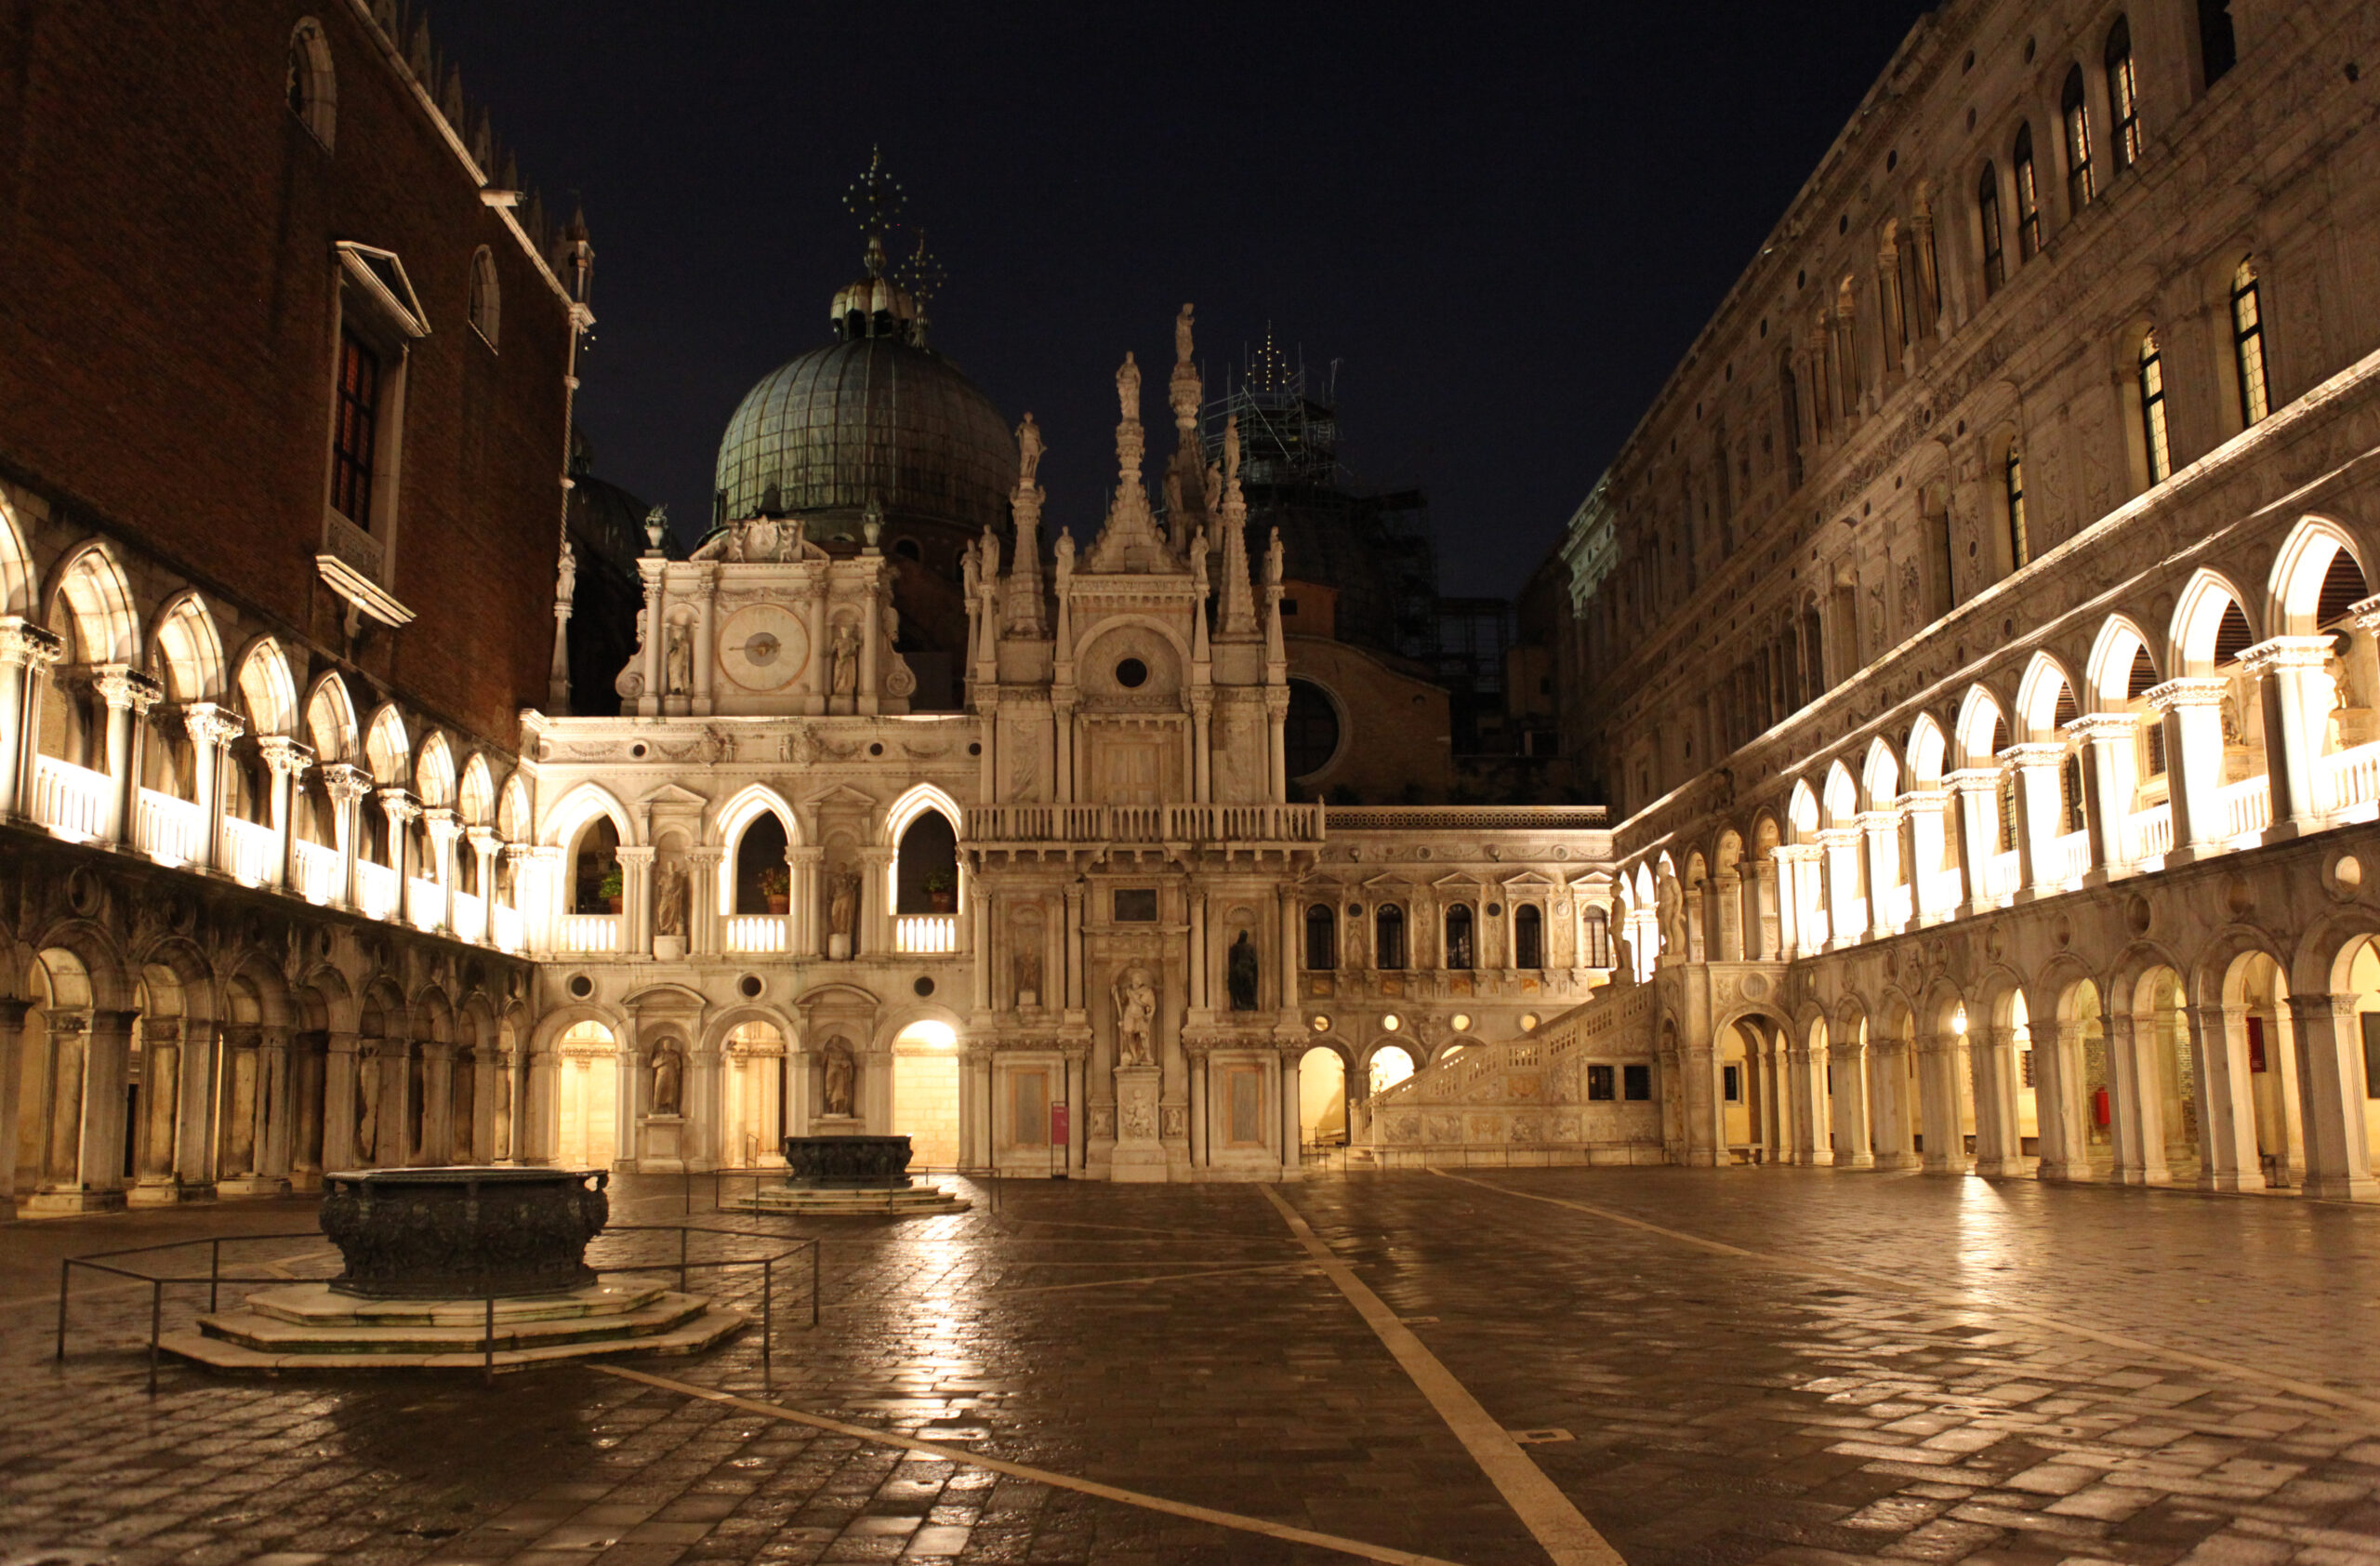 Musei civici di Venezia: aperture straordinarie per le festività